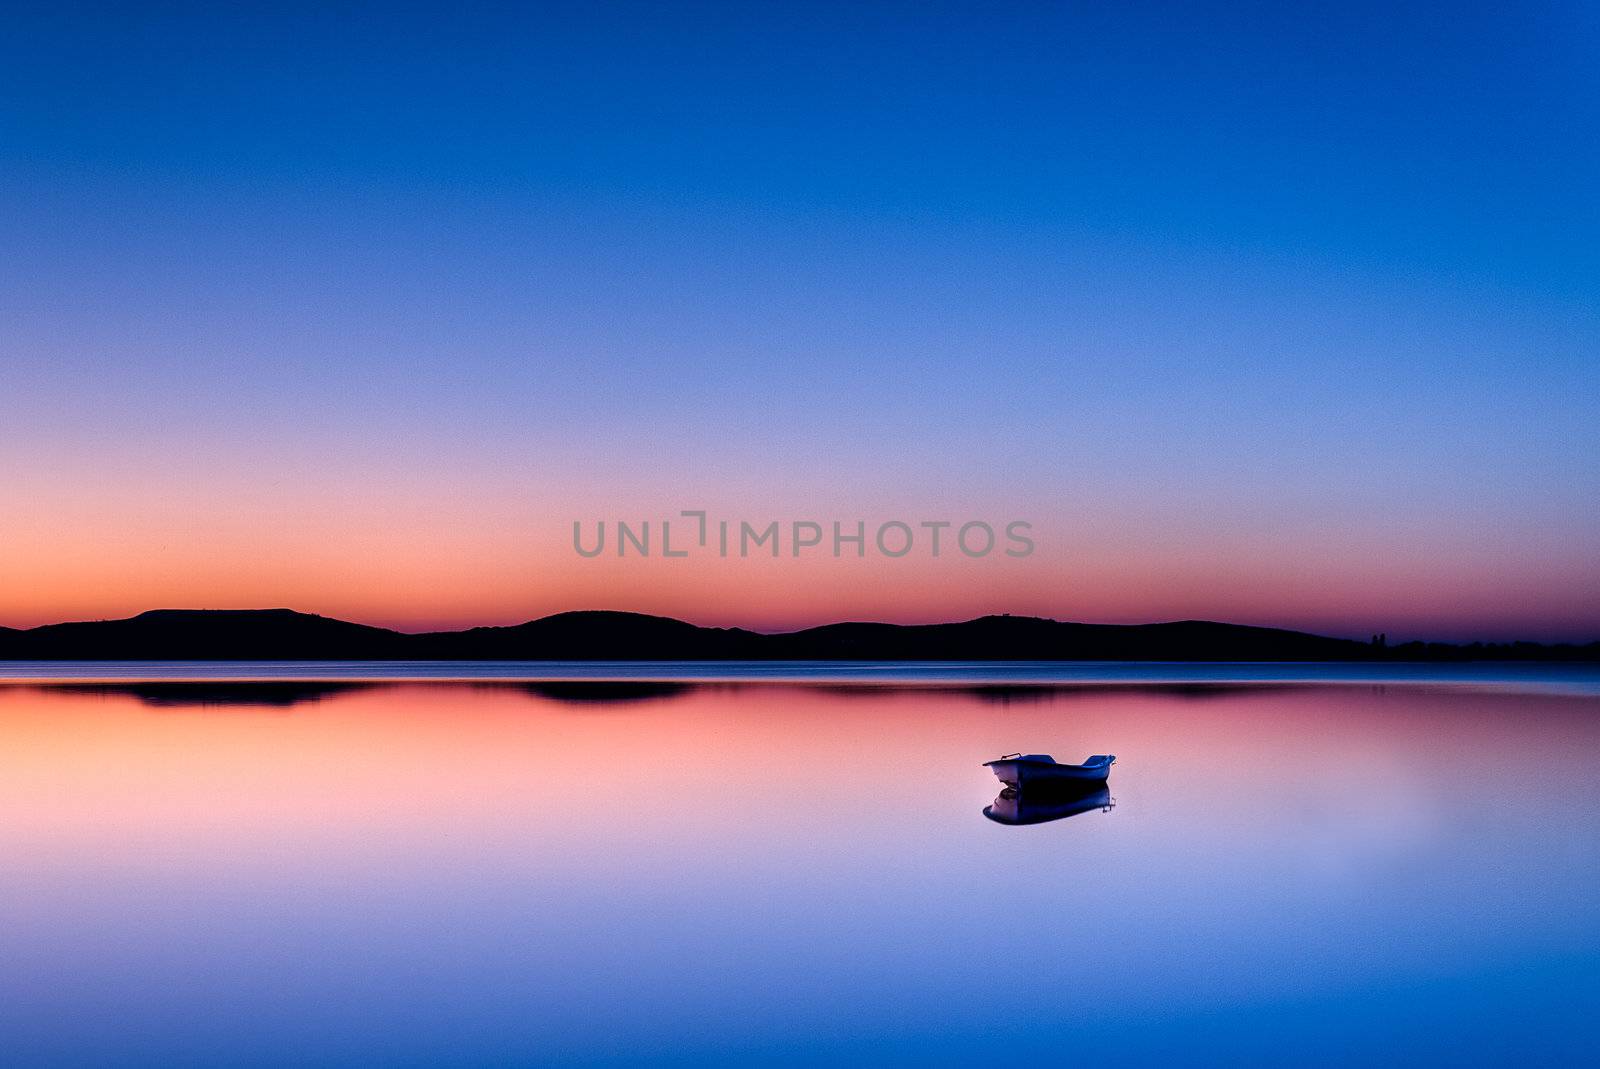 Boat in sunset by lavsen